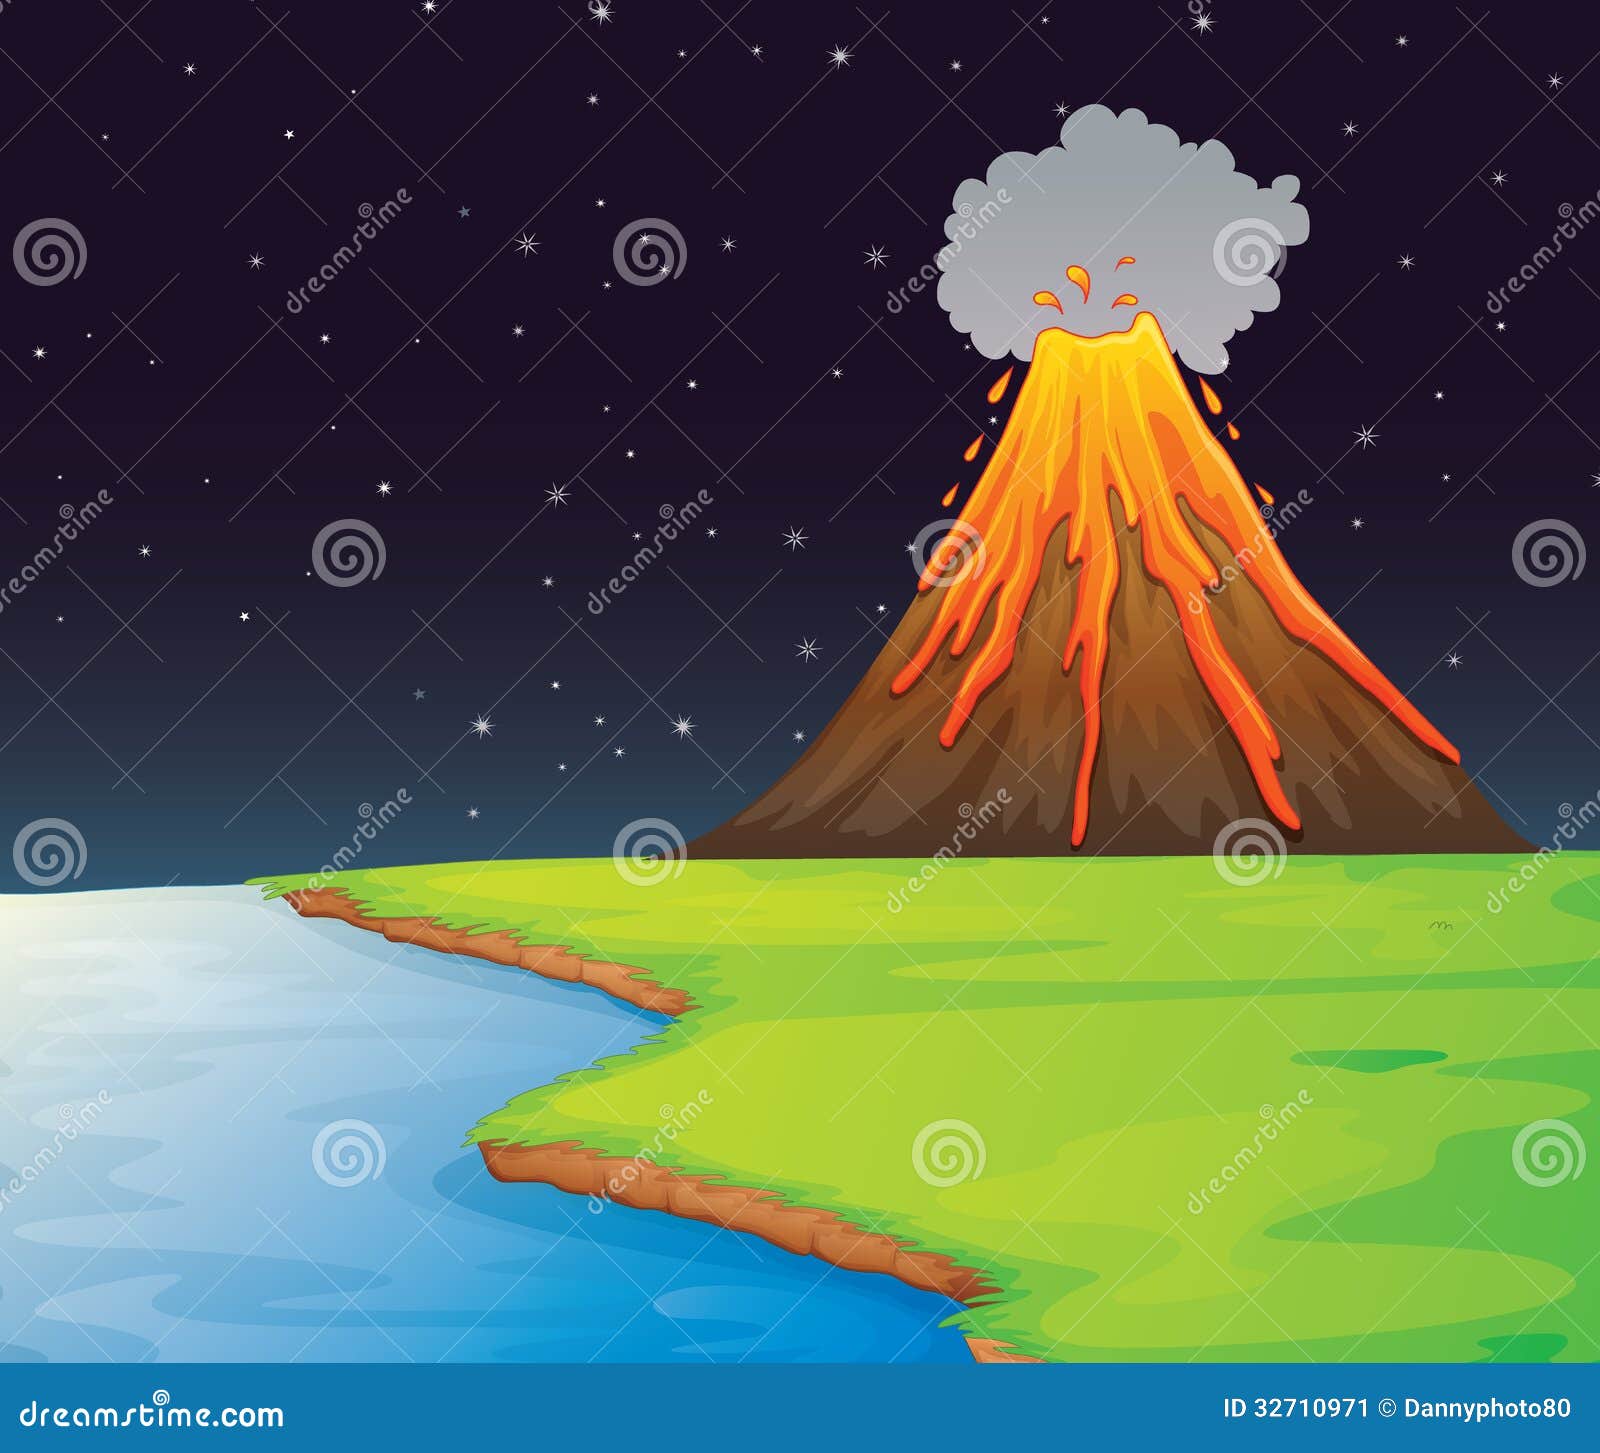 volcano eruption clipart - photo #31